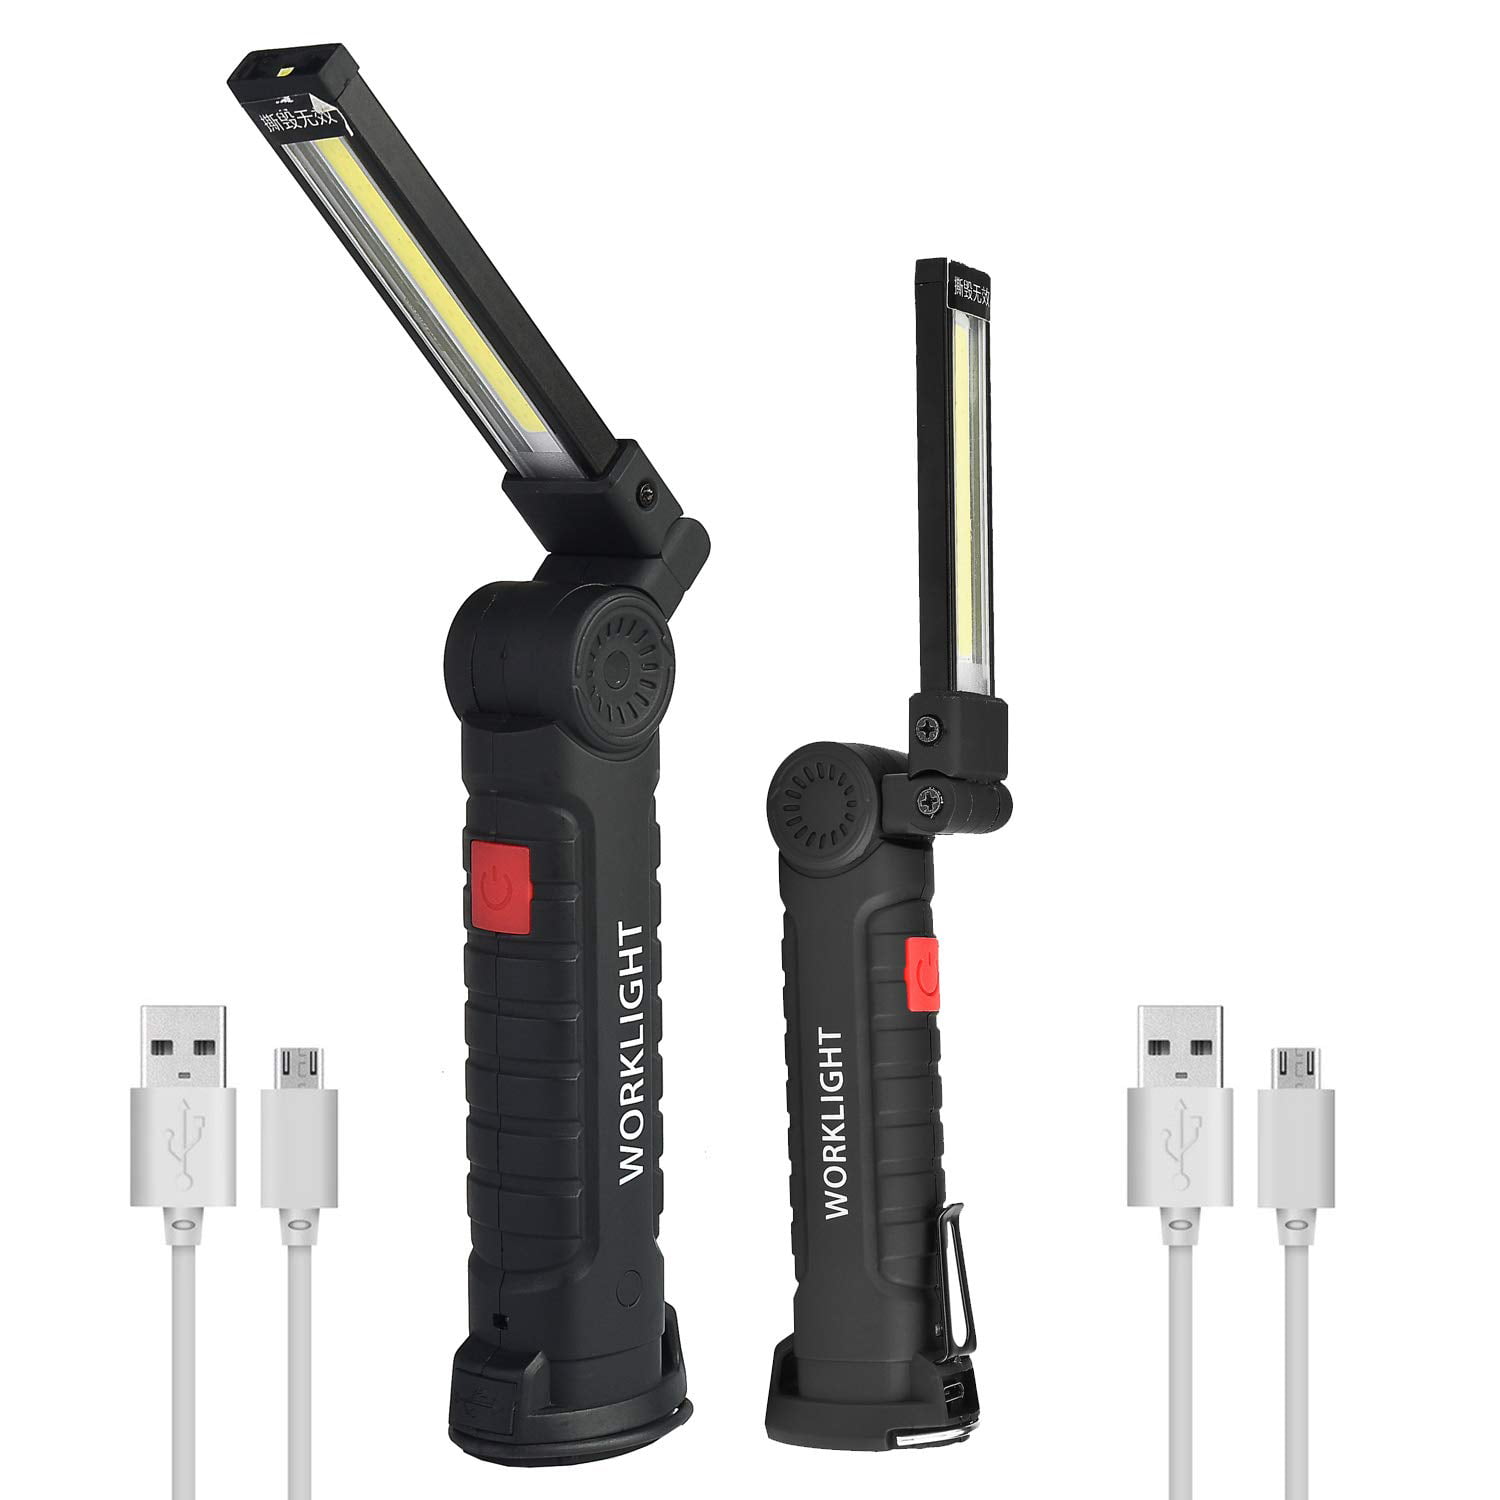 Rechargeable COB LED Slim Work Light Lamp Flashlight Inspect Folding Torch USA 